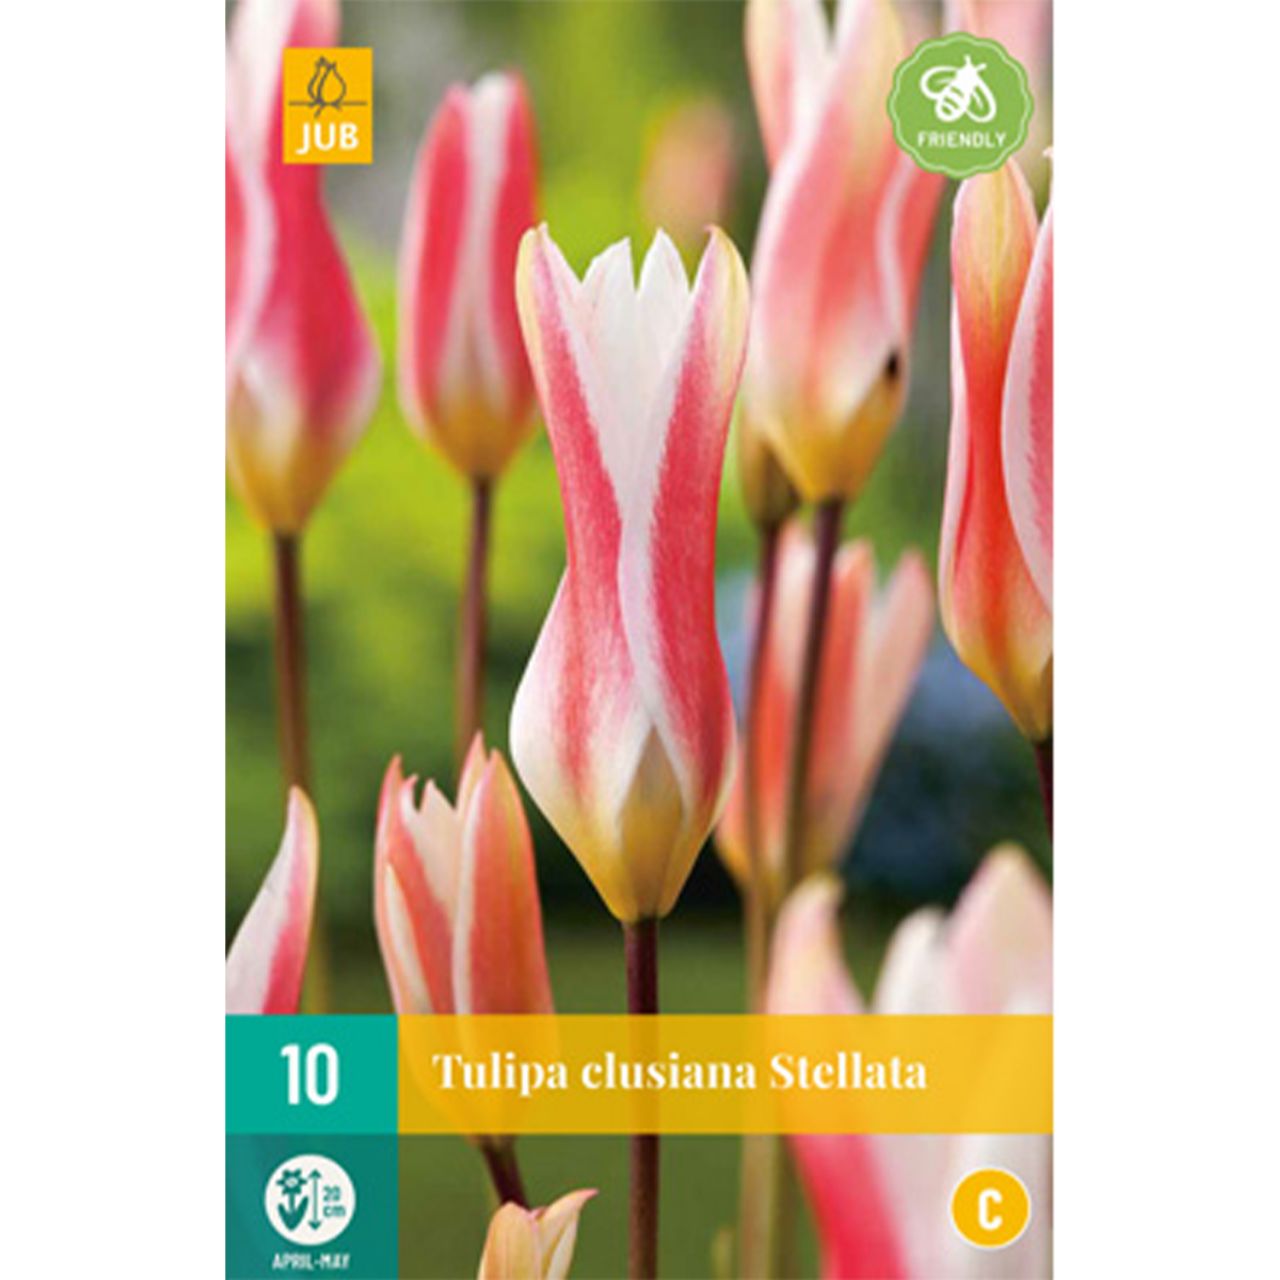 Kategorie <b>Herbst-Blumenzwiebeln </b> - Wildtulpe 'Clusiana Stellata' - 10 Stück - Tulipa Clusiana